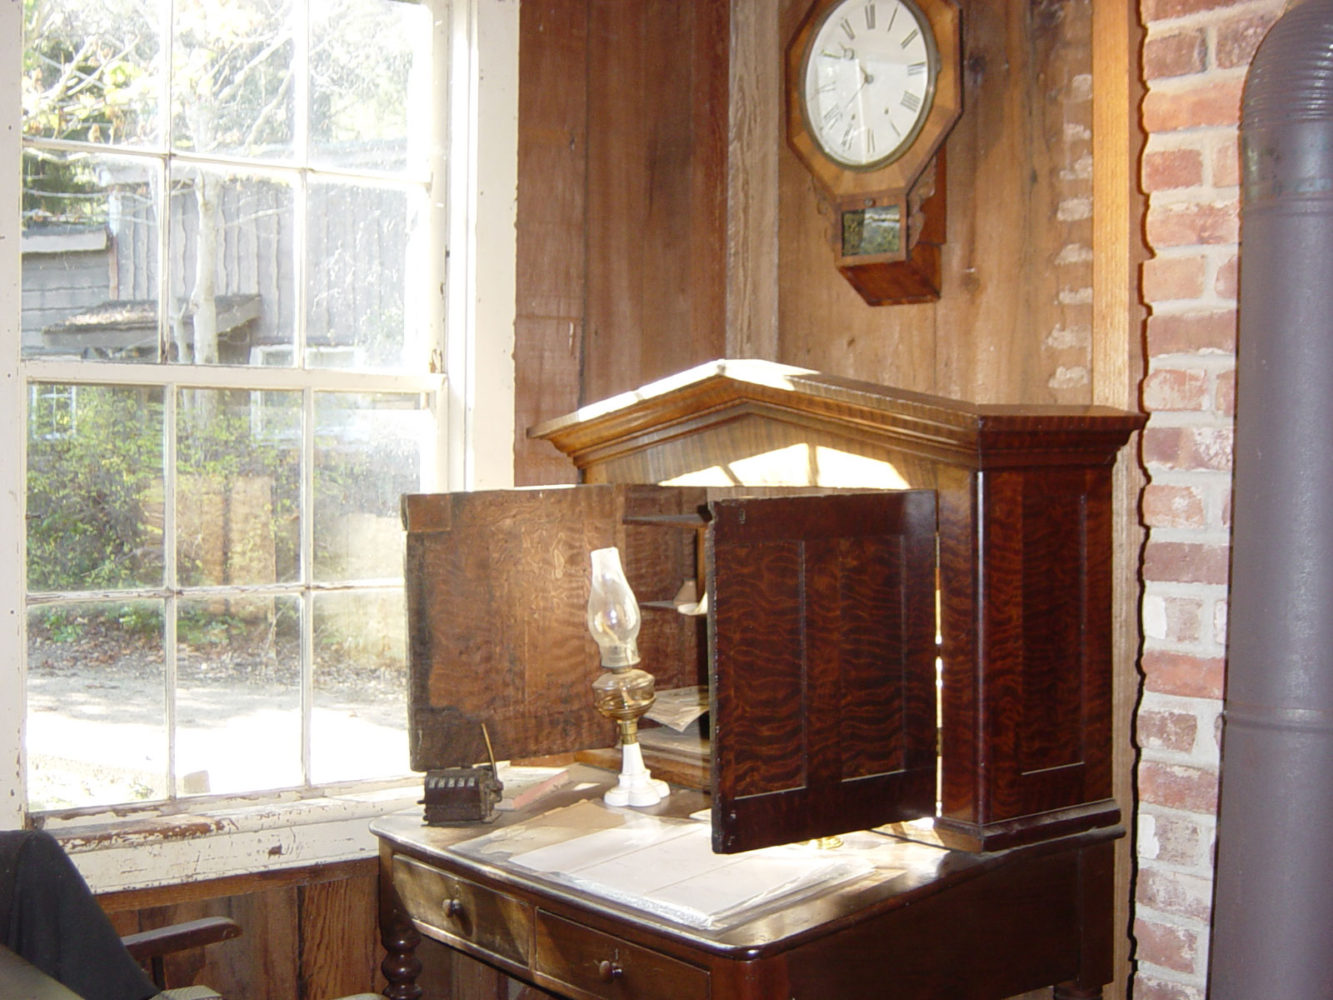 An antique writing desk inside the Woodside Store